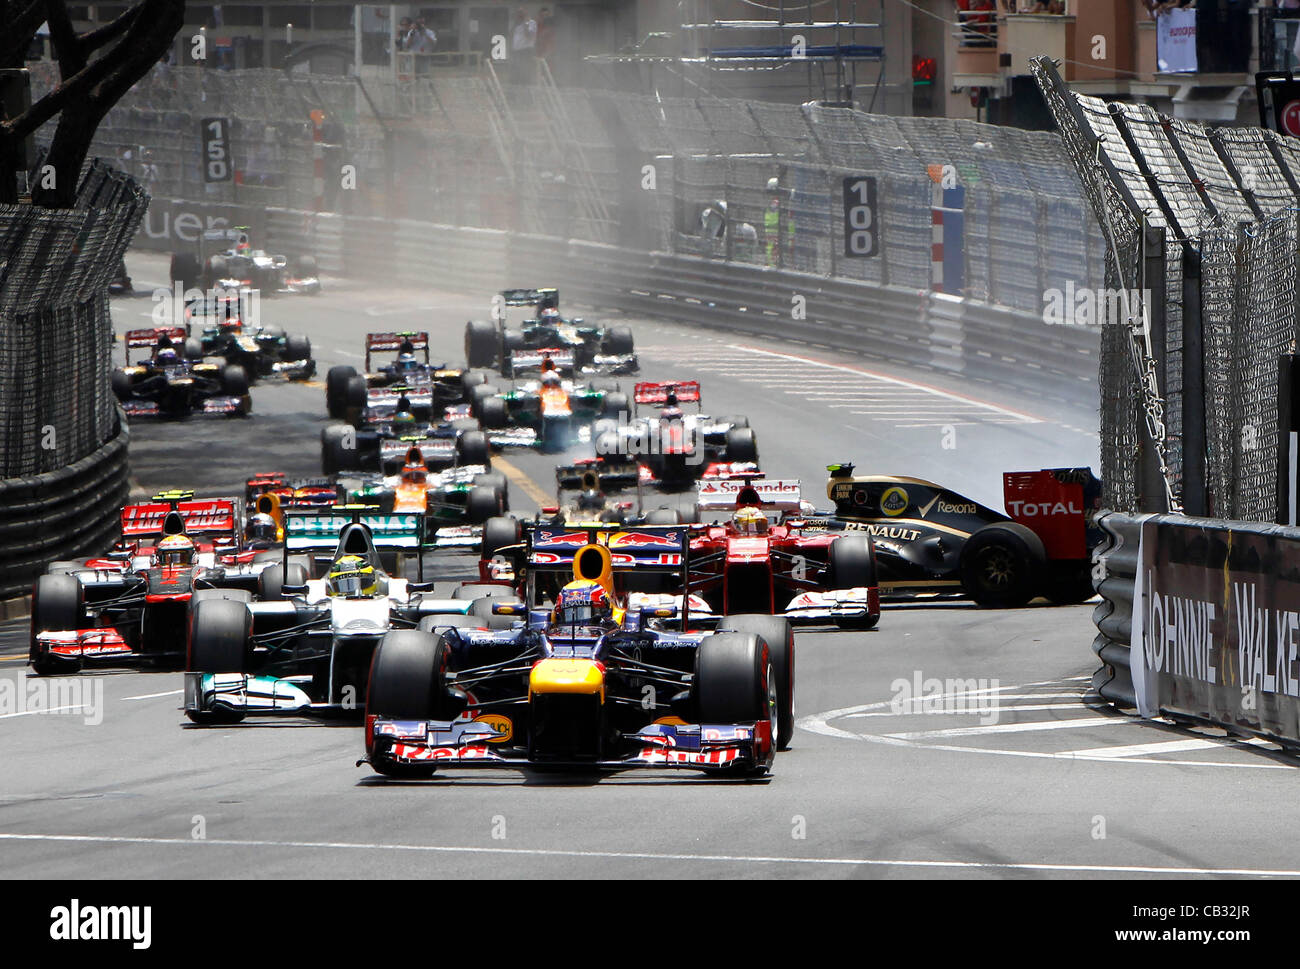 Formula one team championship 2012